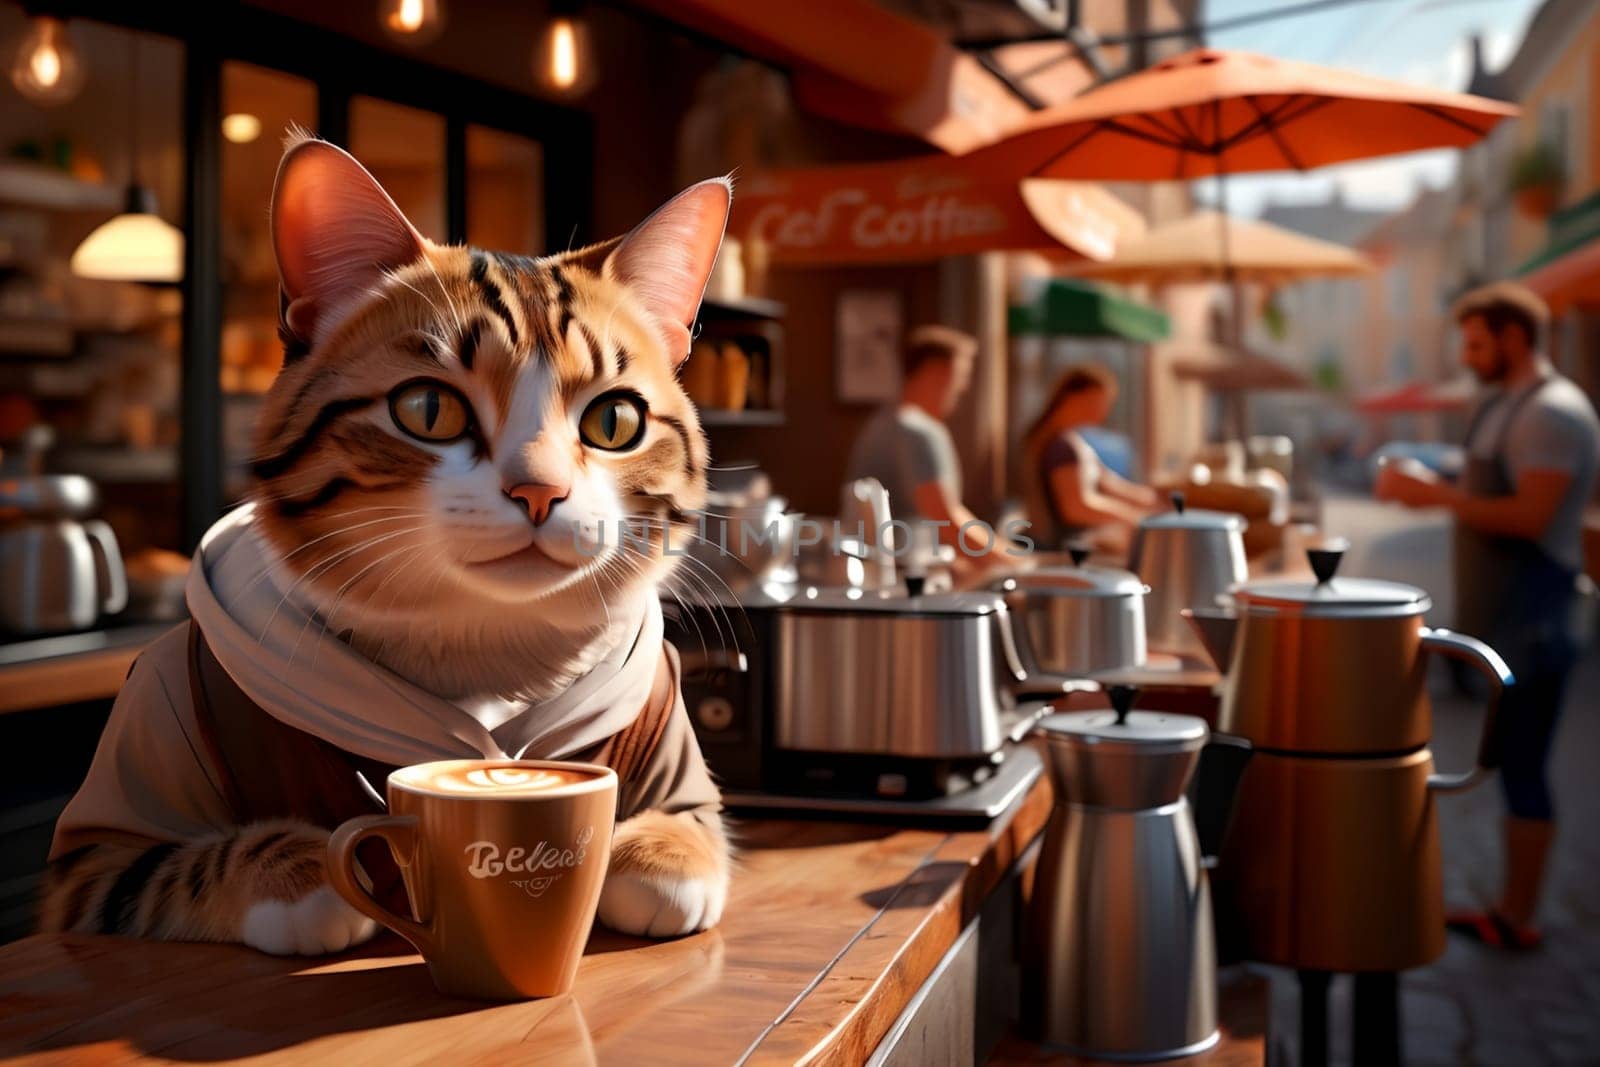 cat barista makes coffee near the coffee machine in a cafe by Rawlik